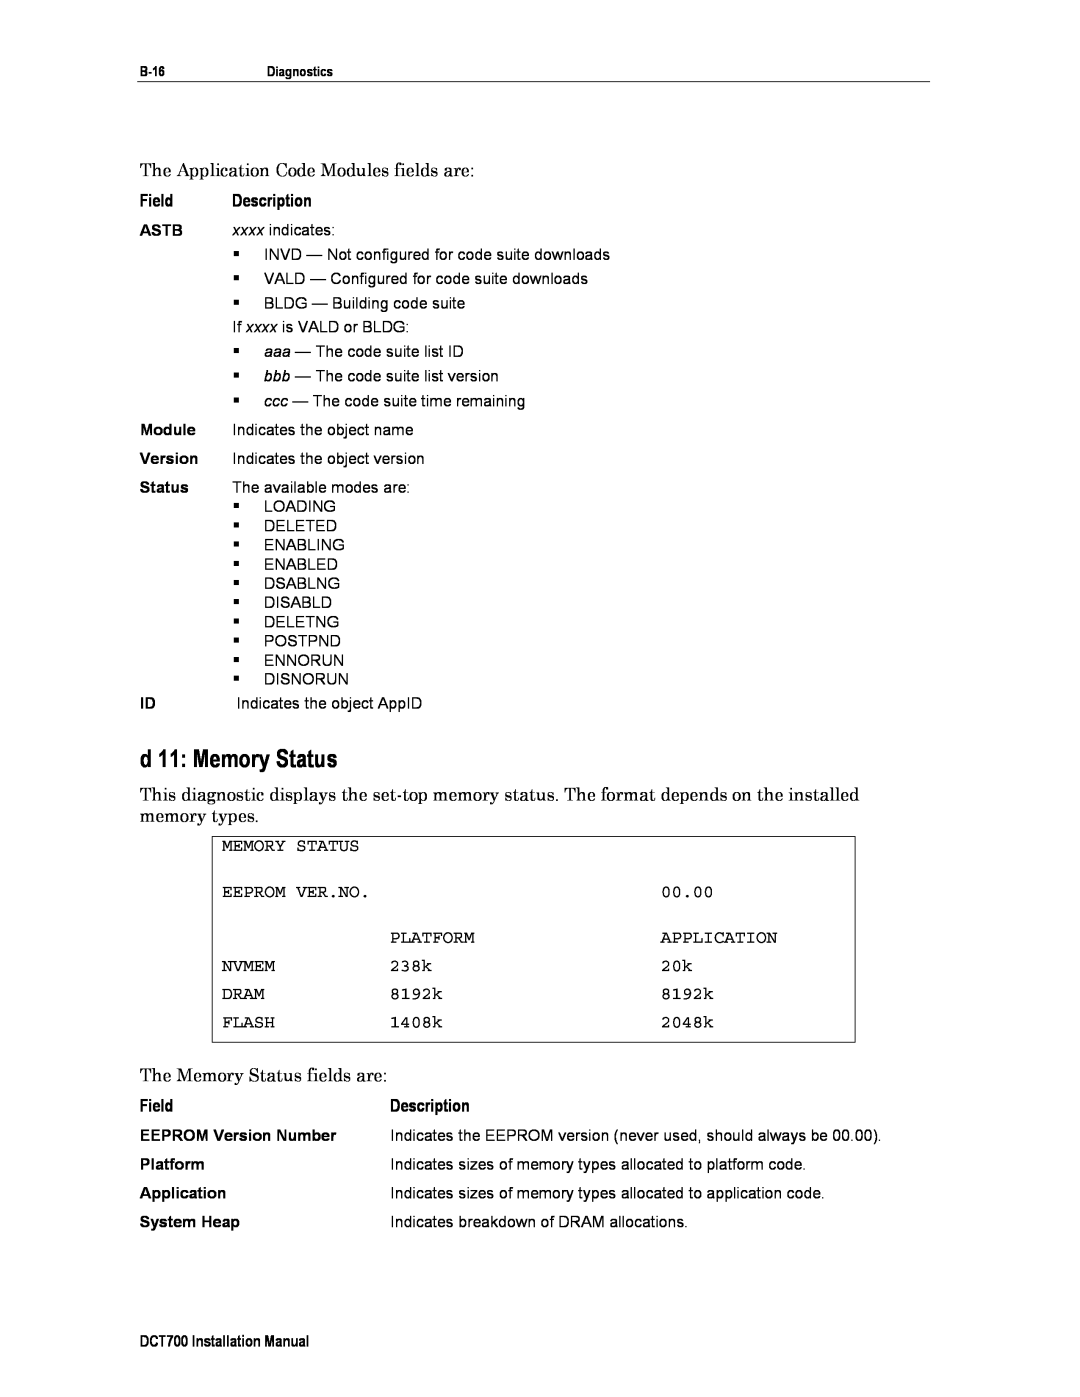 Motorola DCT700, DTC700 installation manual d 11: Memory Status, Field, Description 